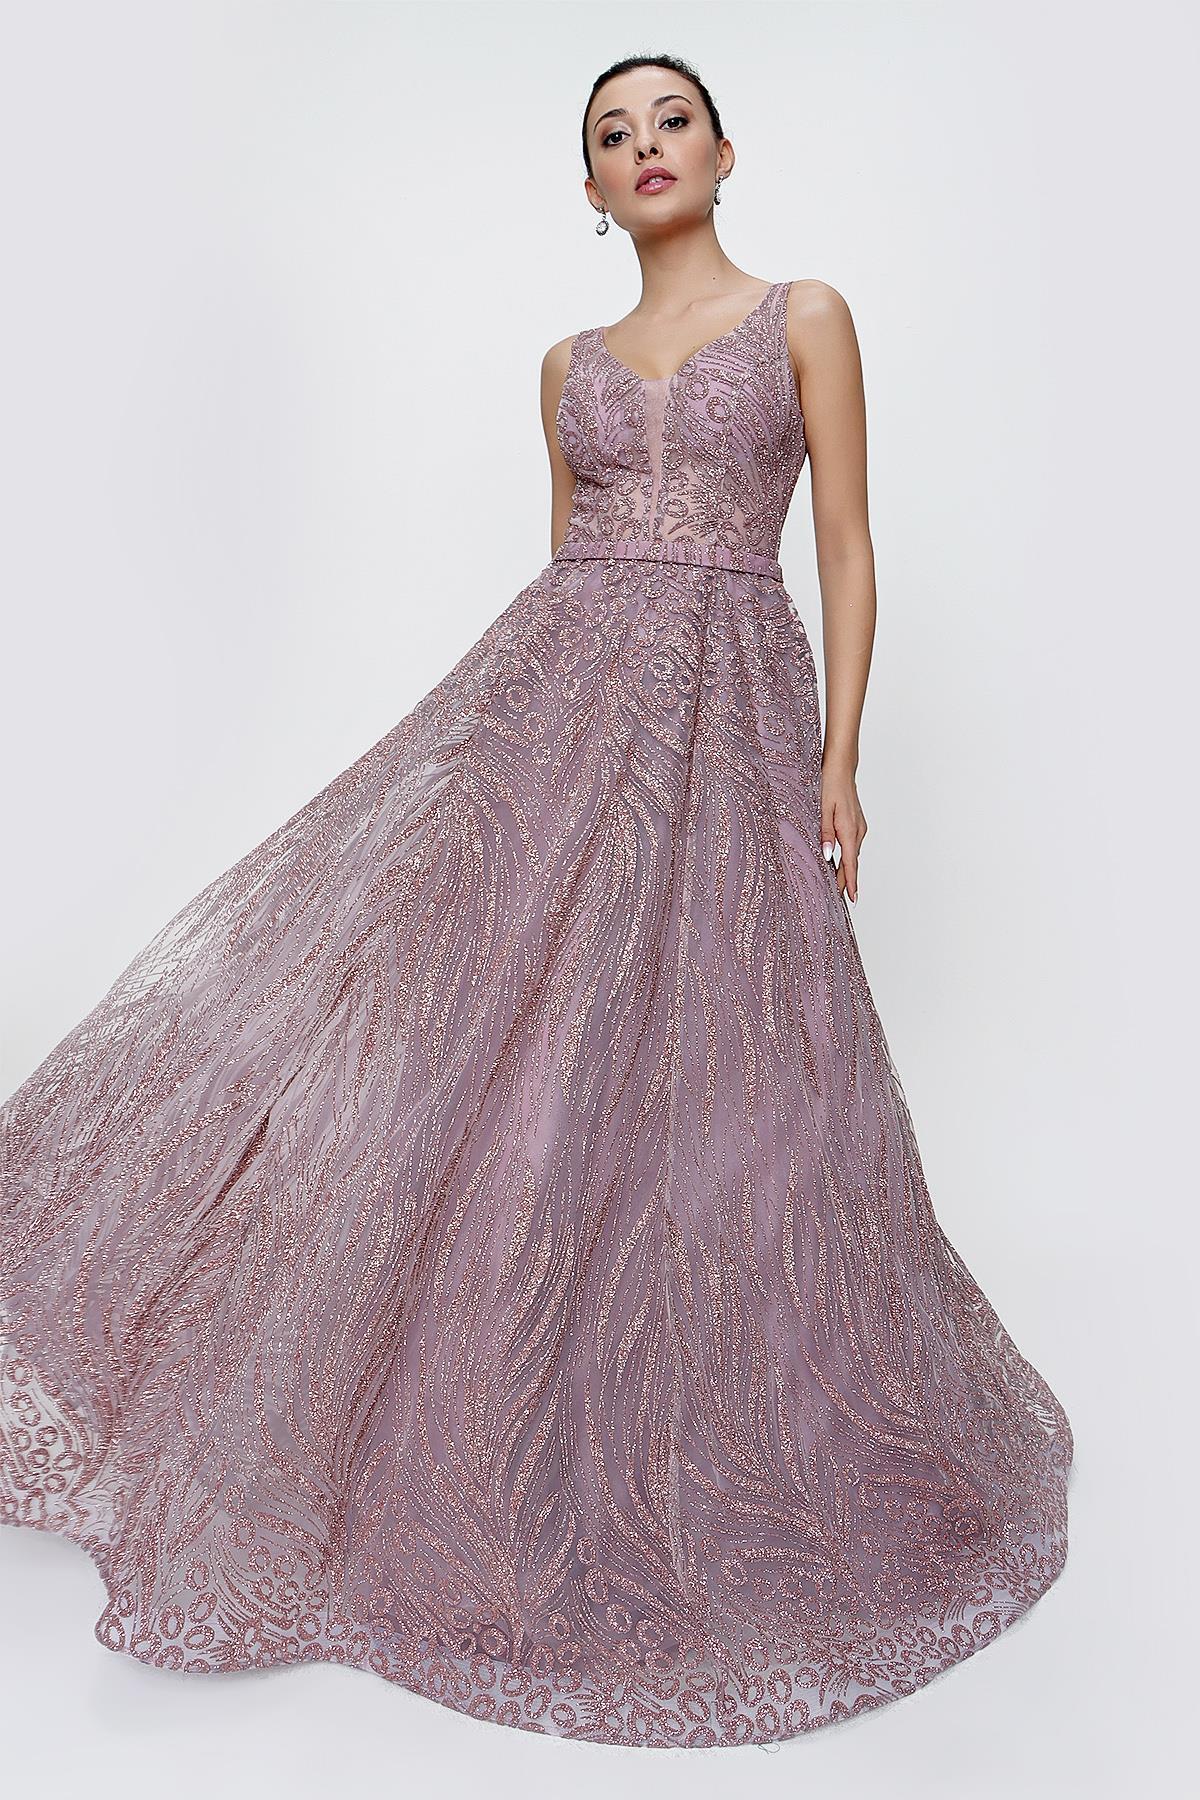 By Saygı Glitter Ghost Tulle Princess Evening Dress